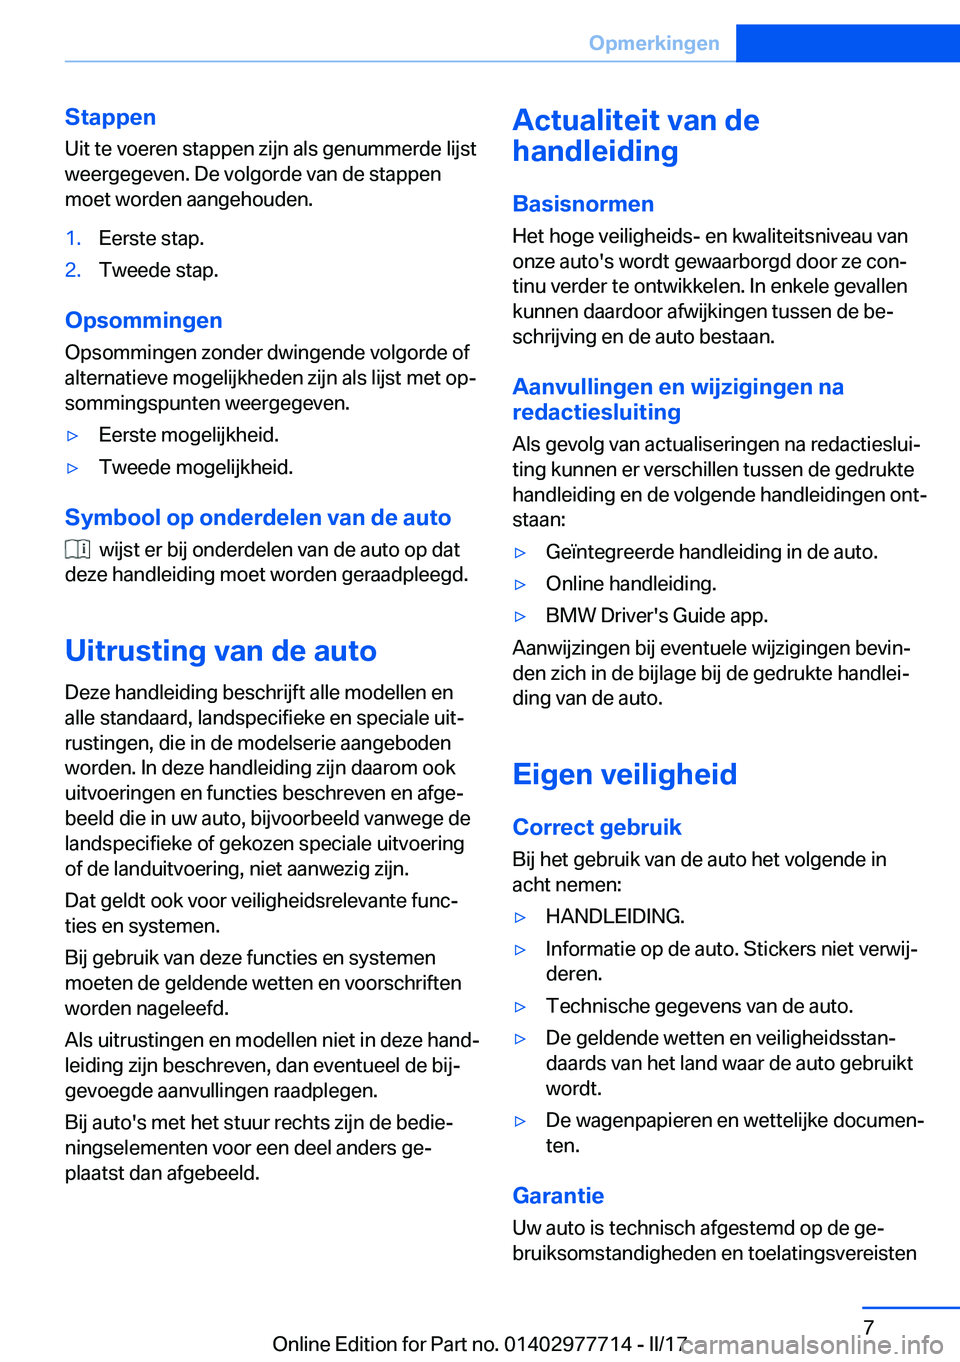 BMW 2 SERIES COUPE 2017  Instructieboekjes (in Dutch) �S�t�a�p�p�e�n
�U�i�t� �t�e� �v�o�e�r�e�n� �s�t�a�p�p�e�n� �z�i�j�n� �a�l�s� �g�e�n�u�m�m�e�r�d�e� �l�i�j�s�t �w�e�e�r�g�e�g�e�v�e�n�.� �D�e� �v�o�l�g�o�r�d�e� �v�a�n� �d�e� �s�t�a�p�p�e�n�m�o�e�t� �w